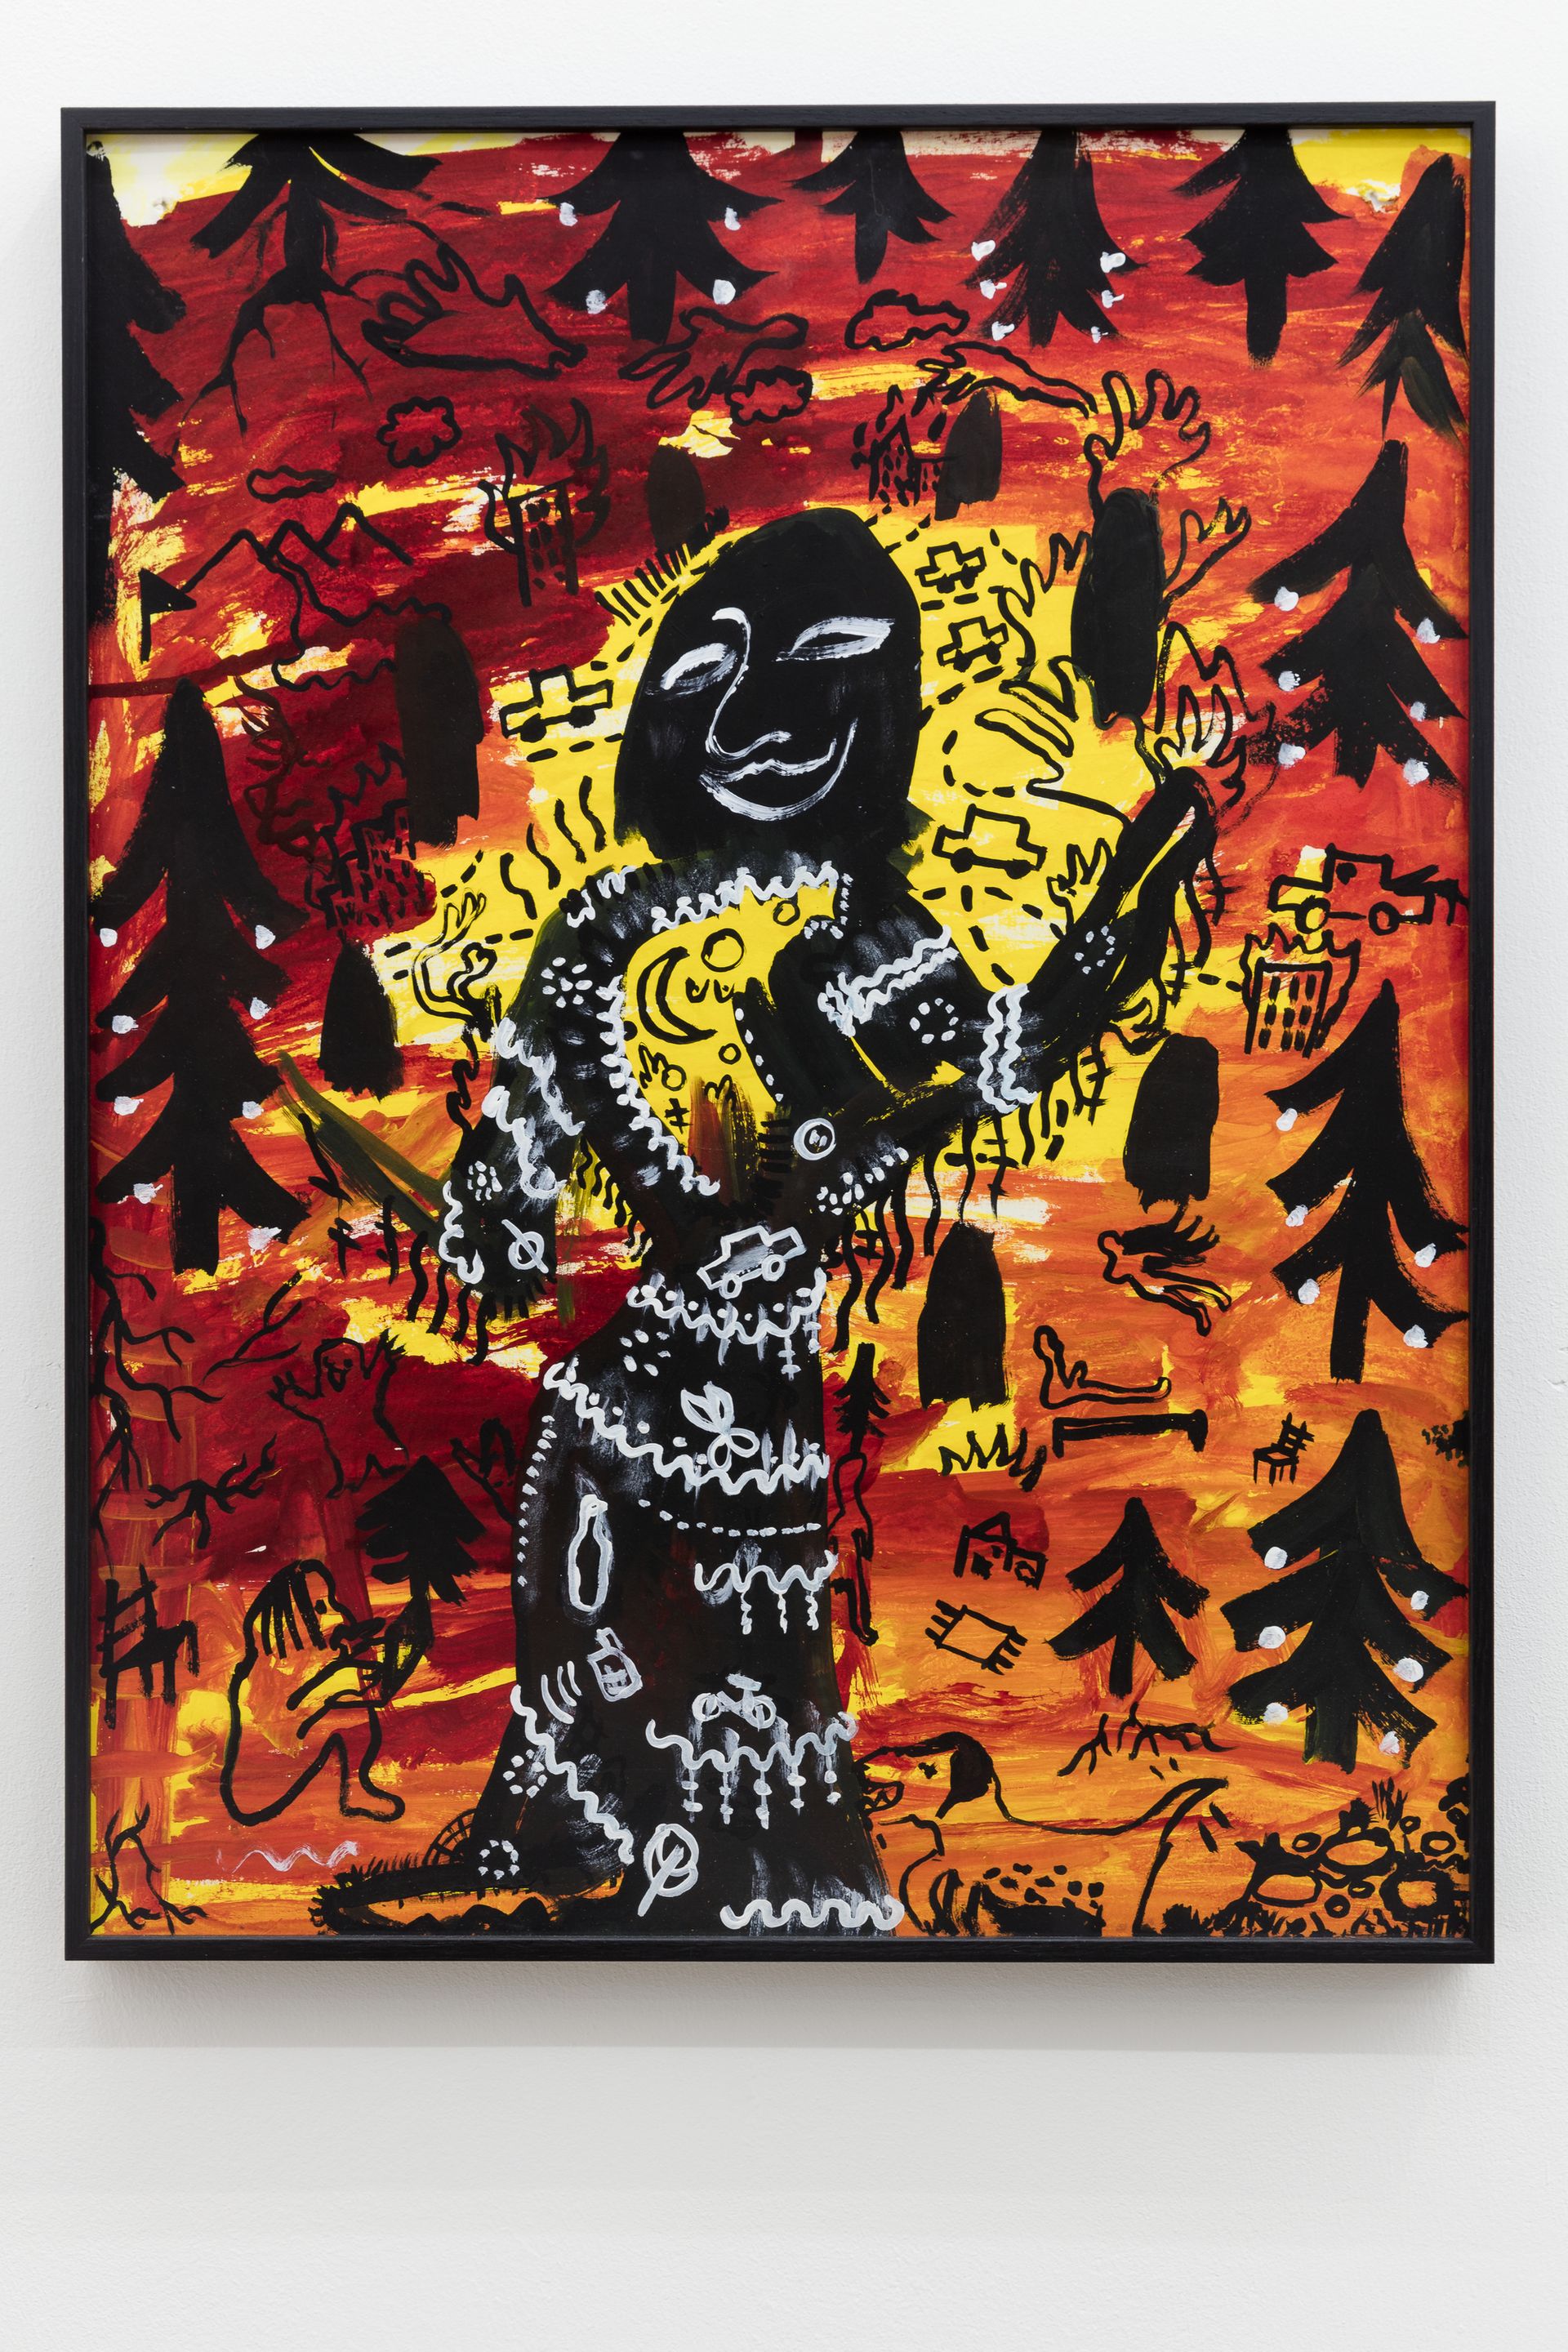 Anna McCarthy, Hexe im Wald, 2018, ink, acrylic on pasteboard, 65.5 × 50.5 cm